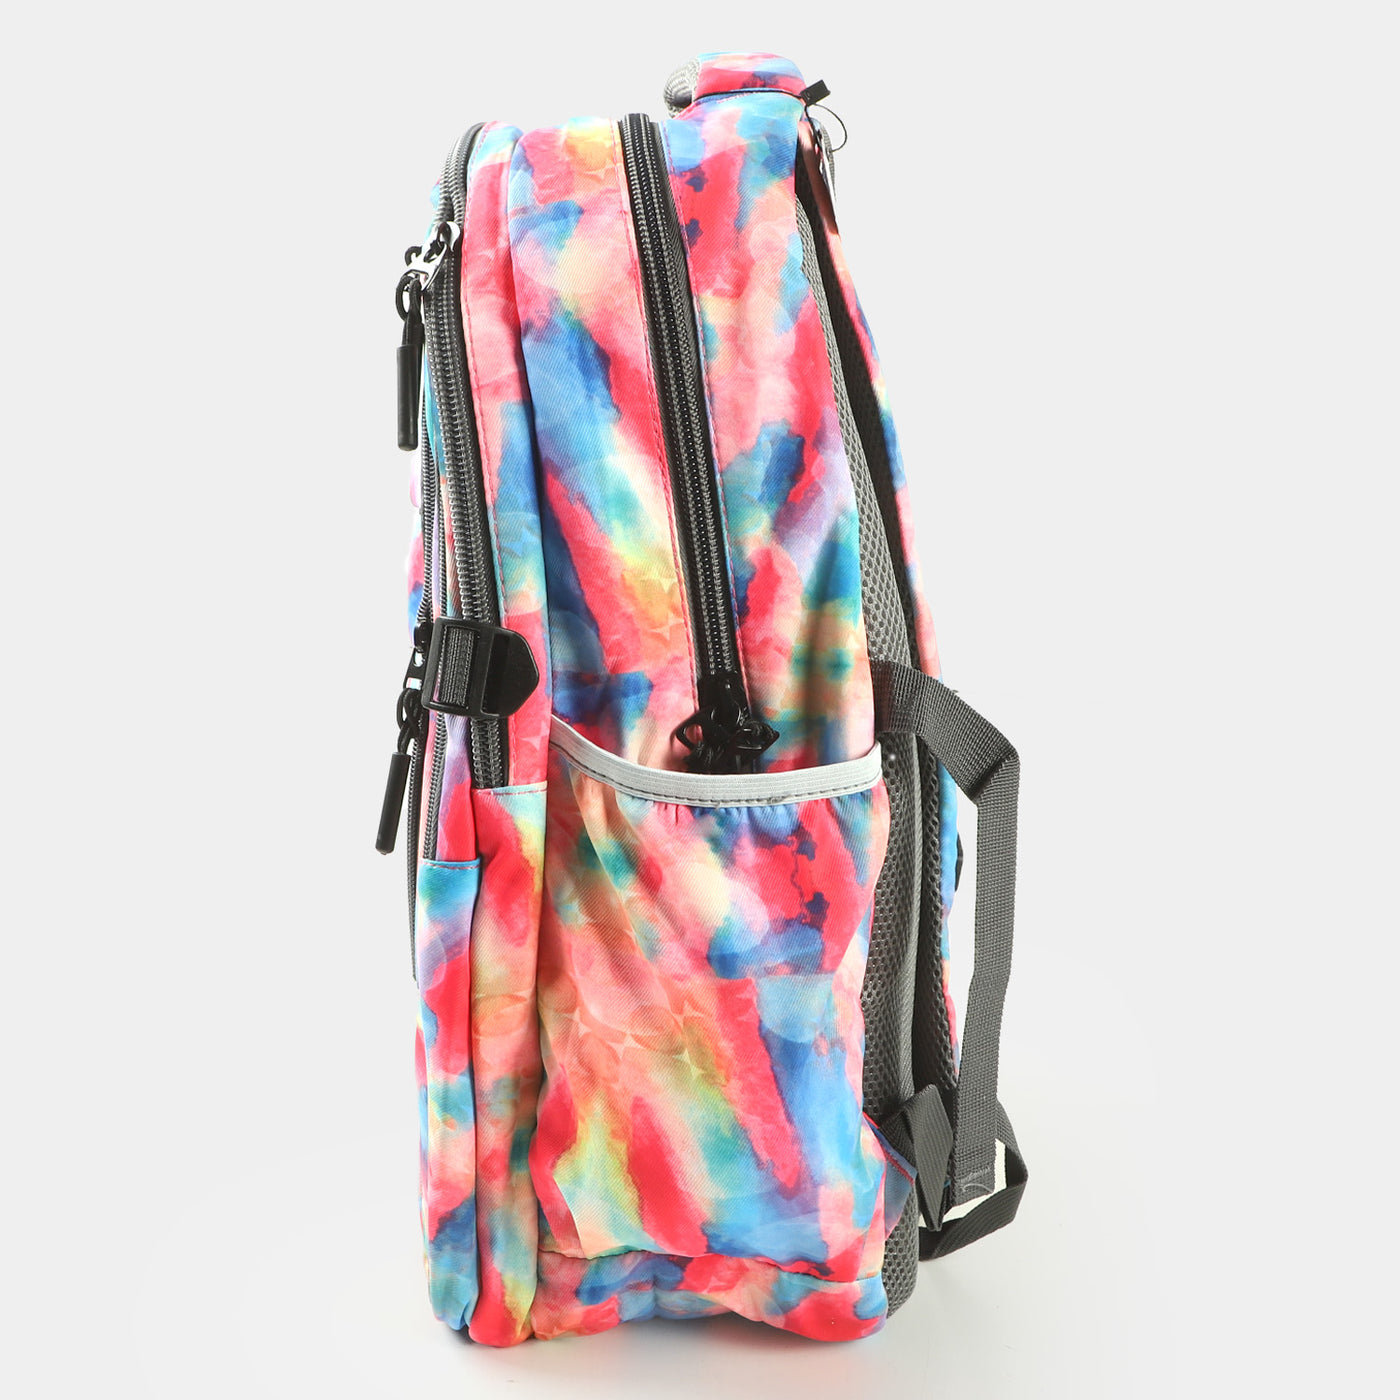 School/Travel Backpack For Kids